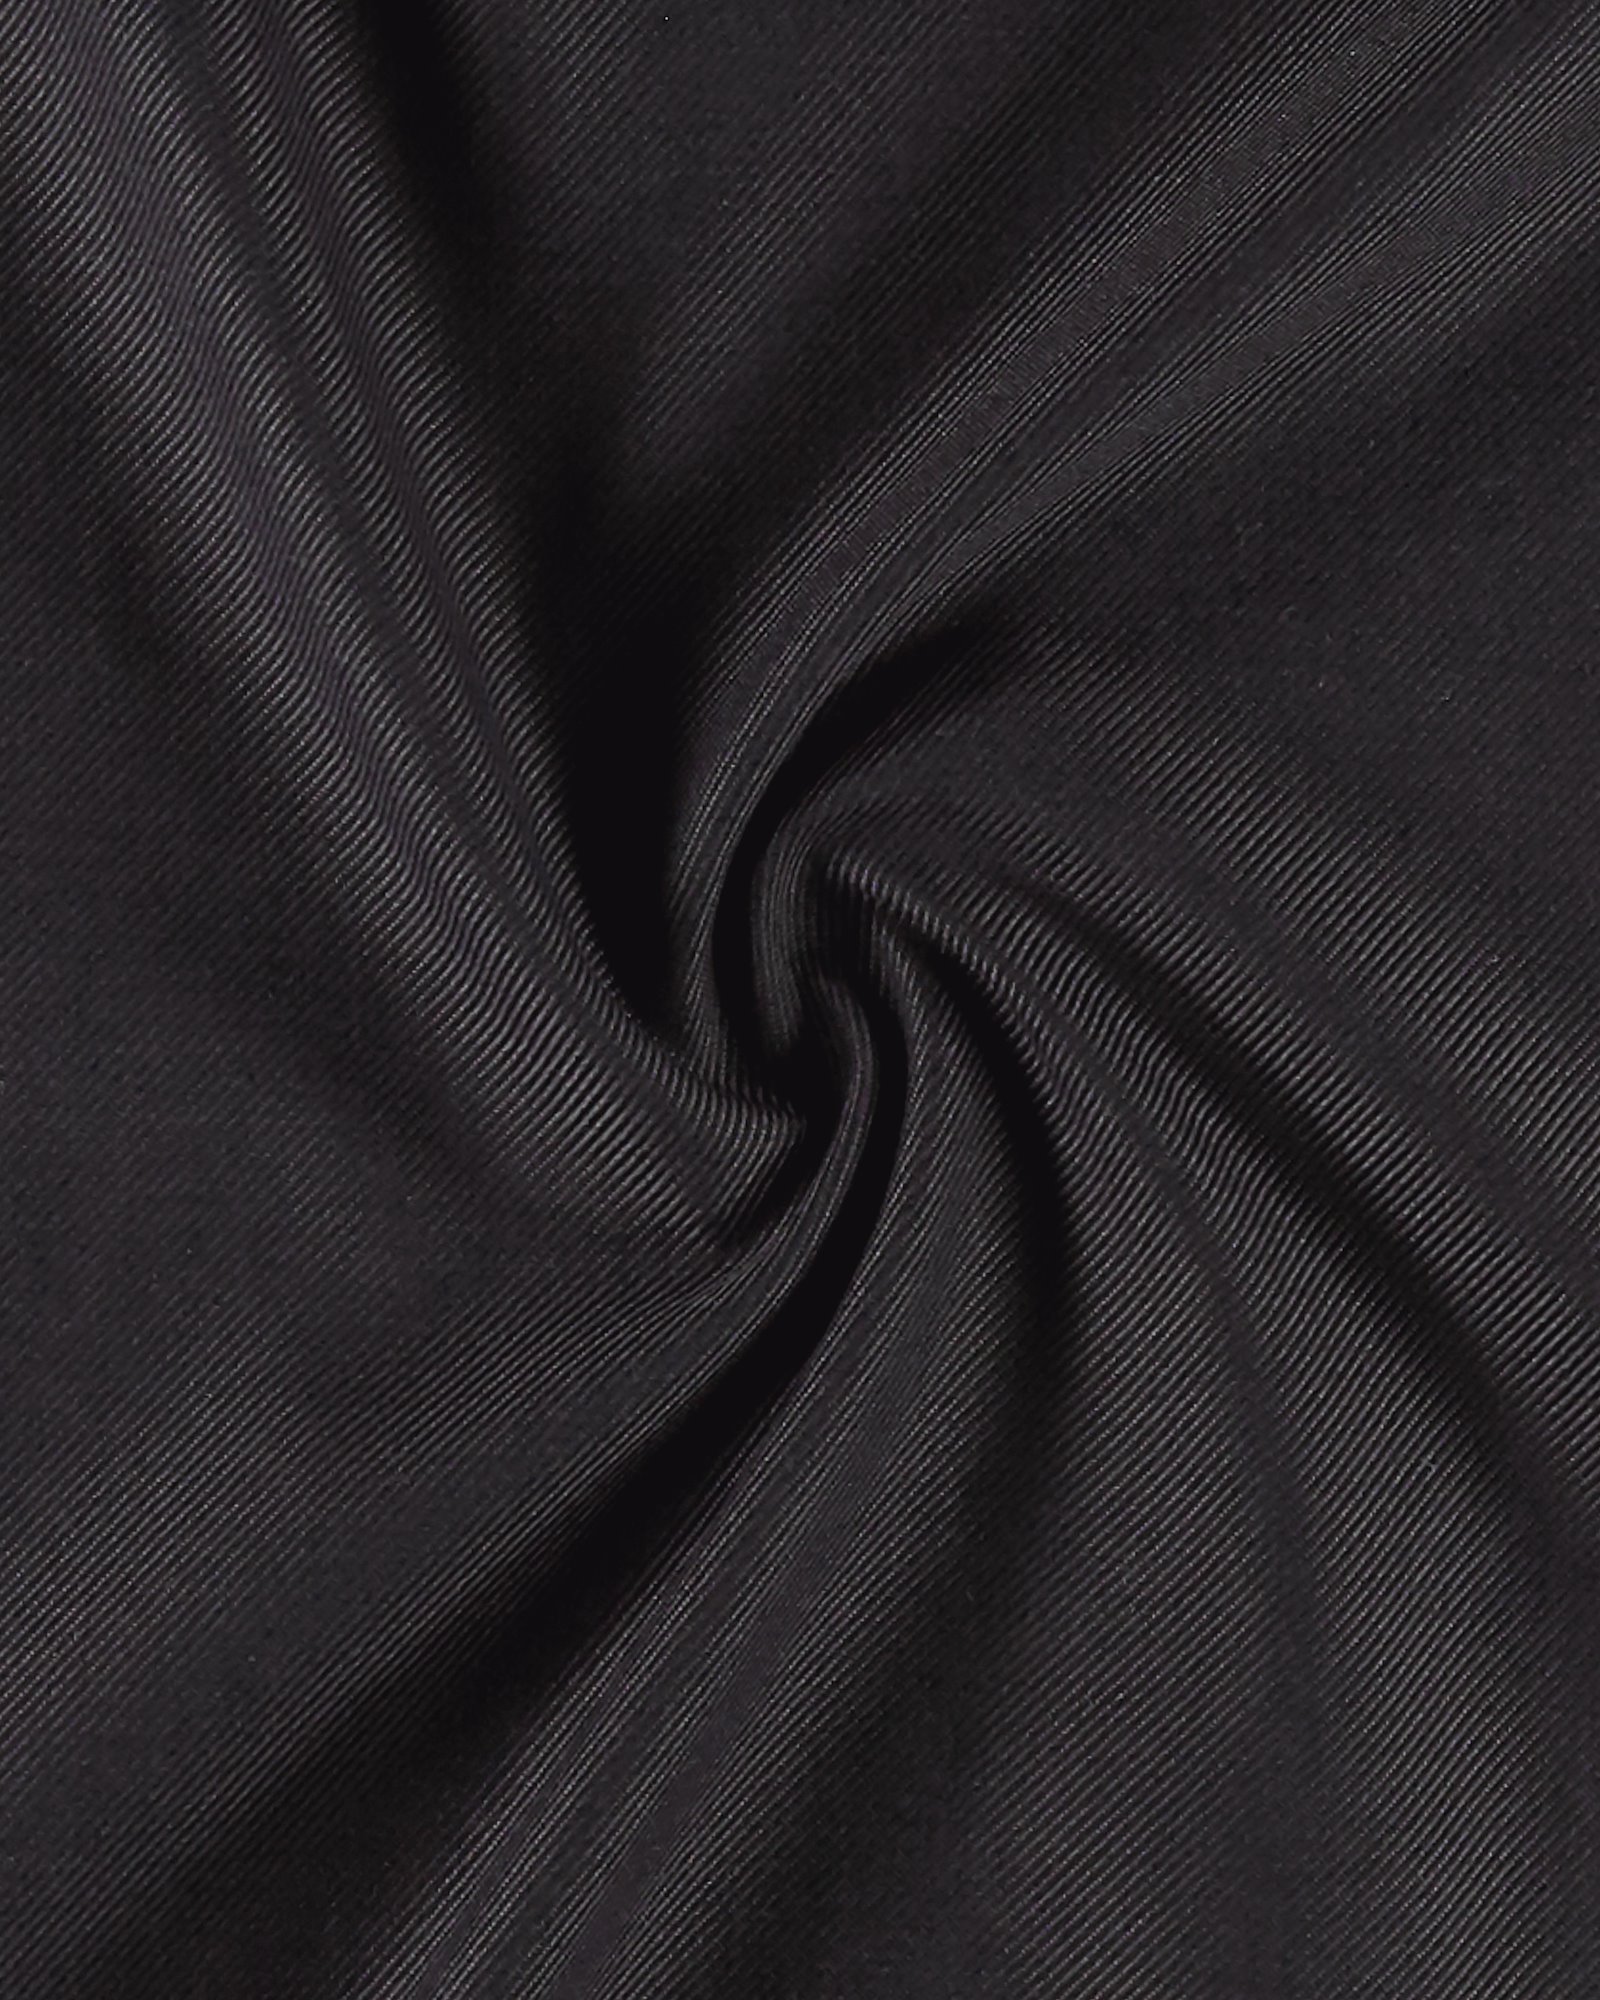 Upholstery twill dark purple/black 826542_pack